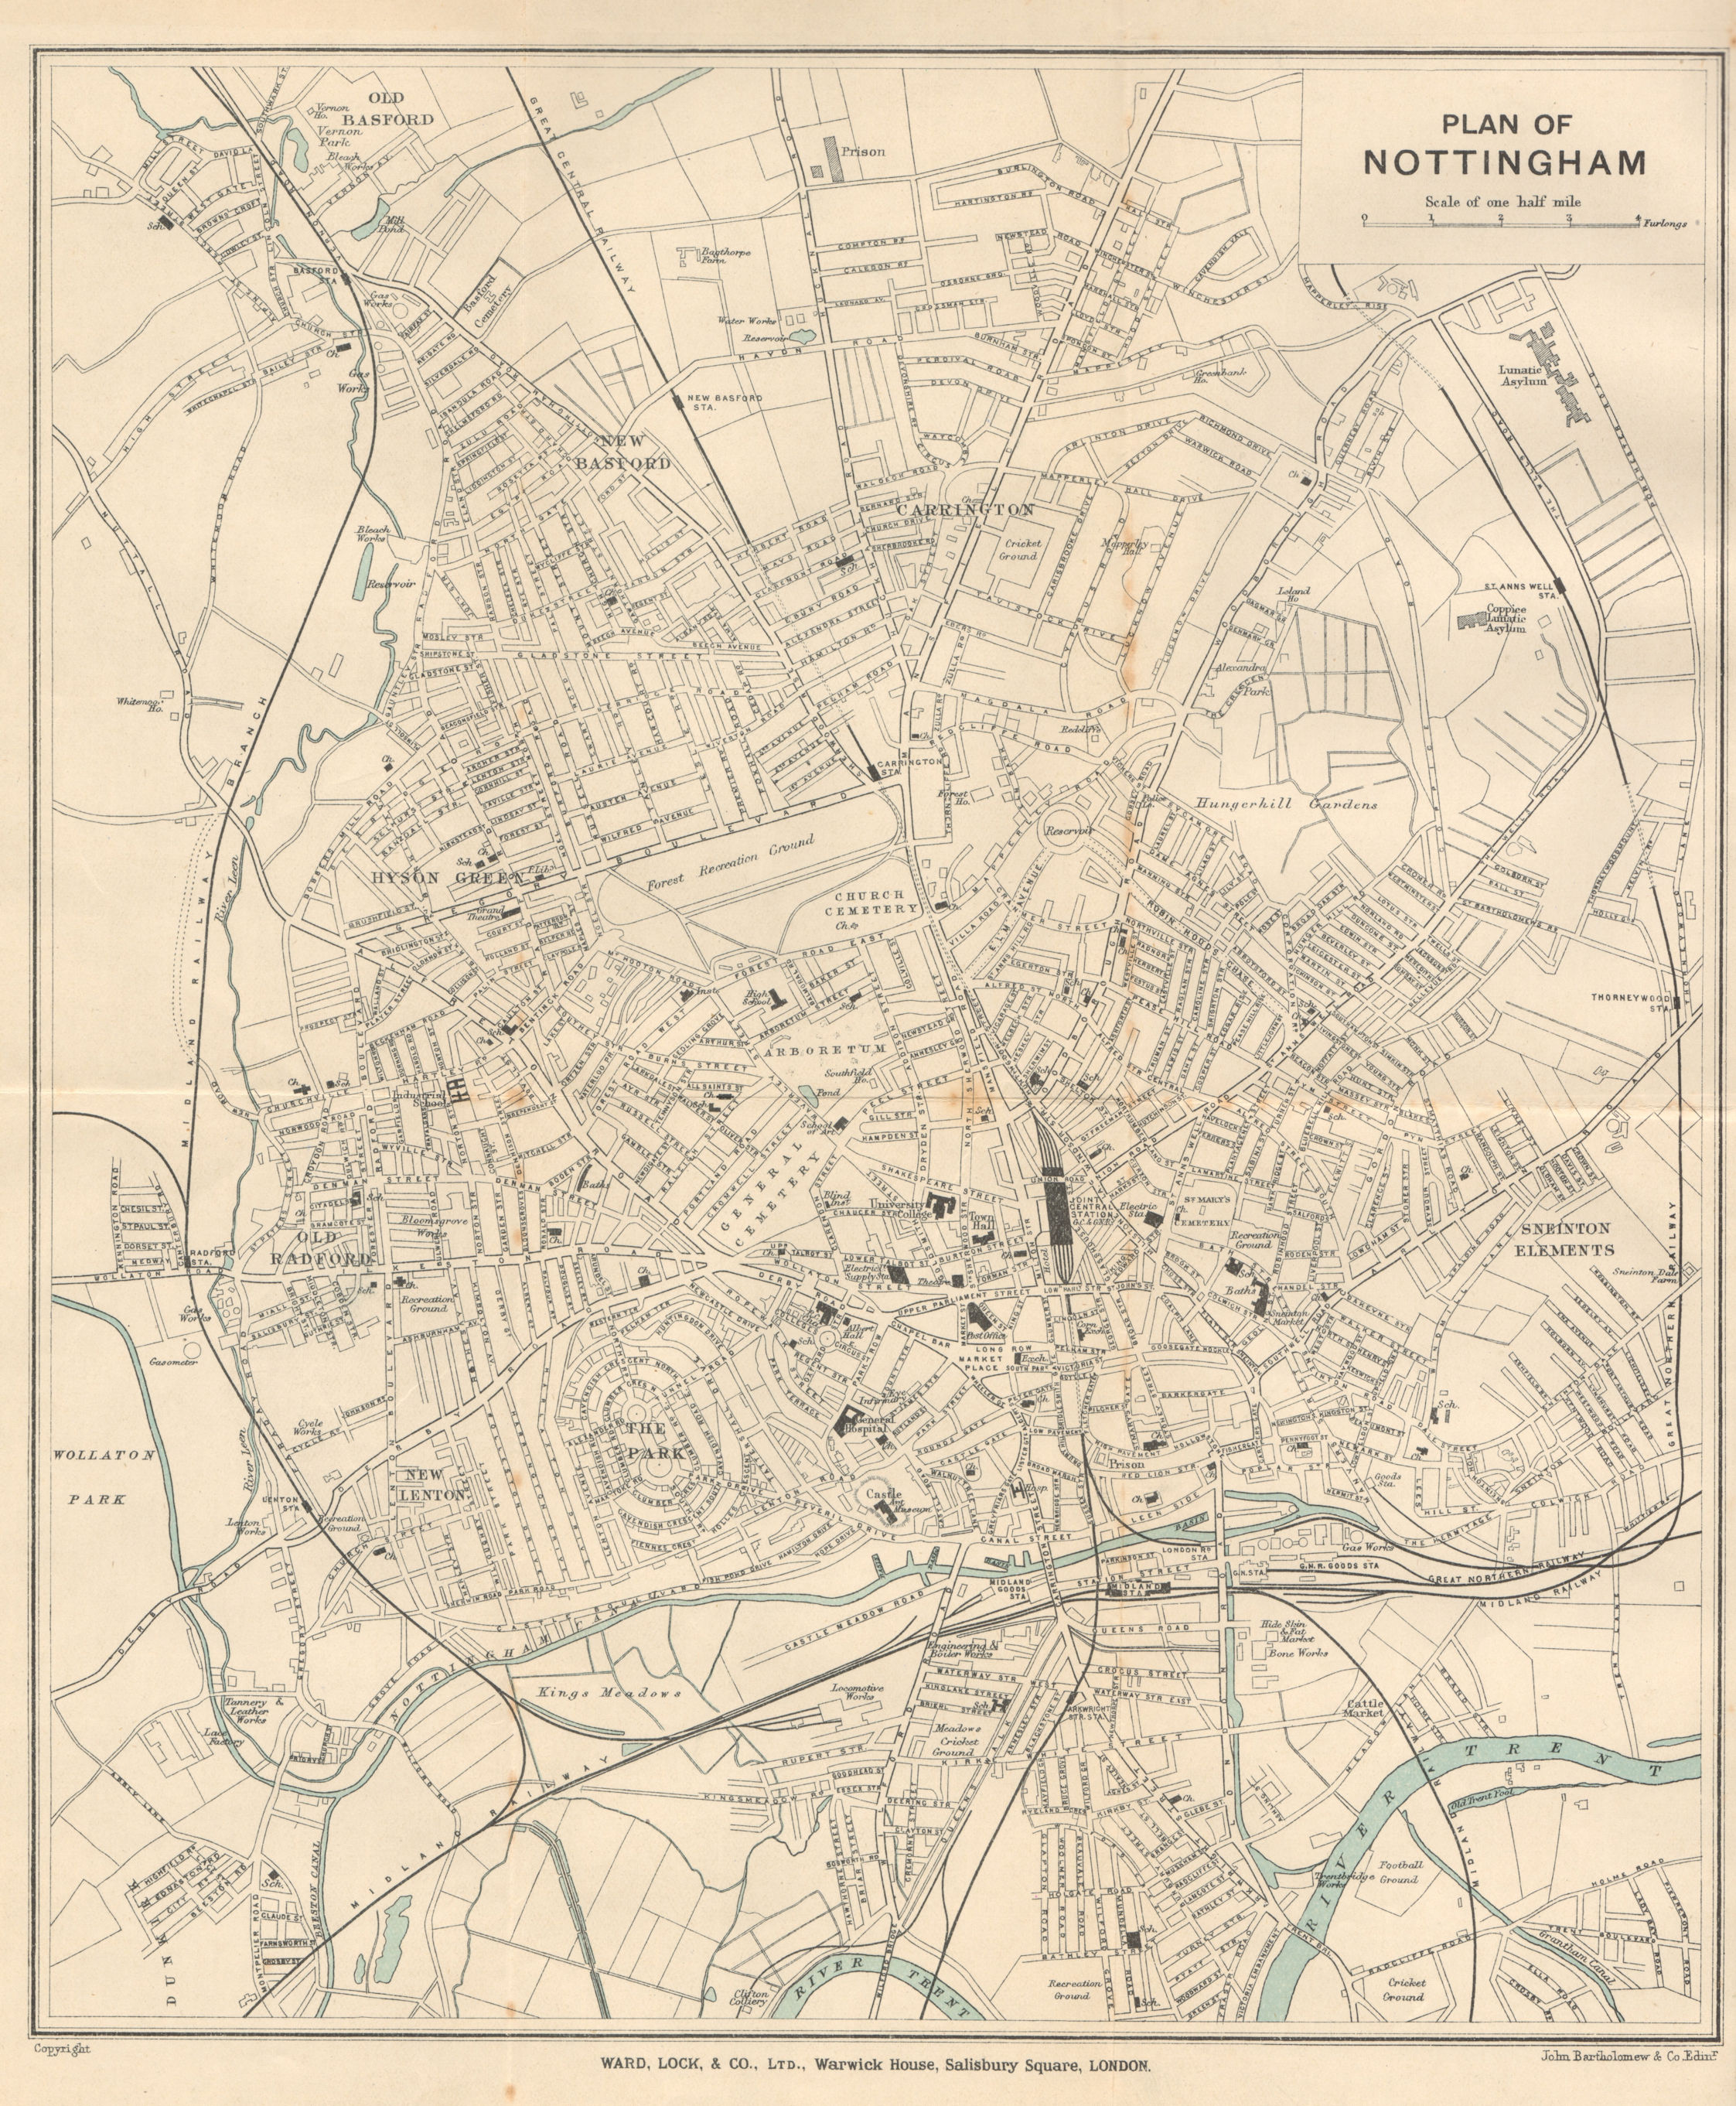 Associate Product NOTTINGHAM vintage town/city plan. Nottinghamshire. WARD LOCK 1925 old map